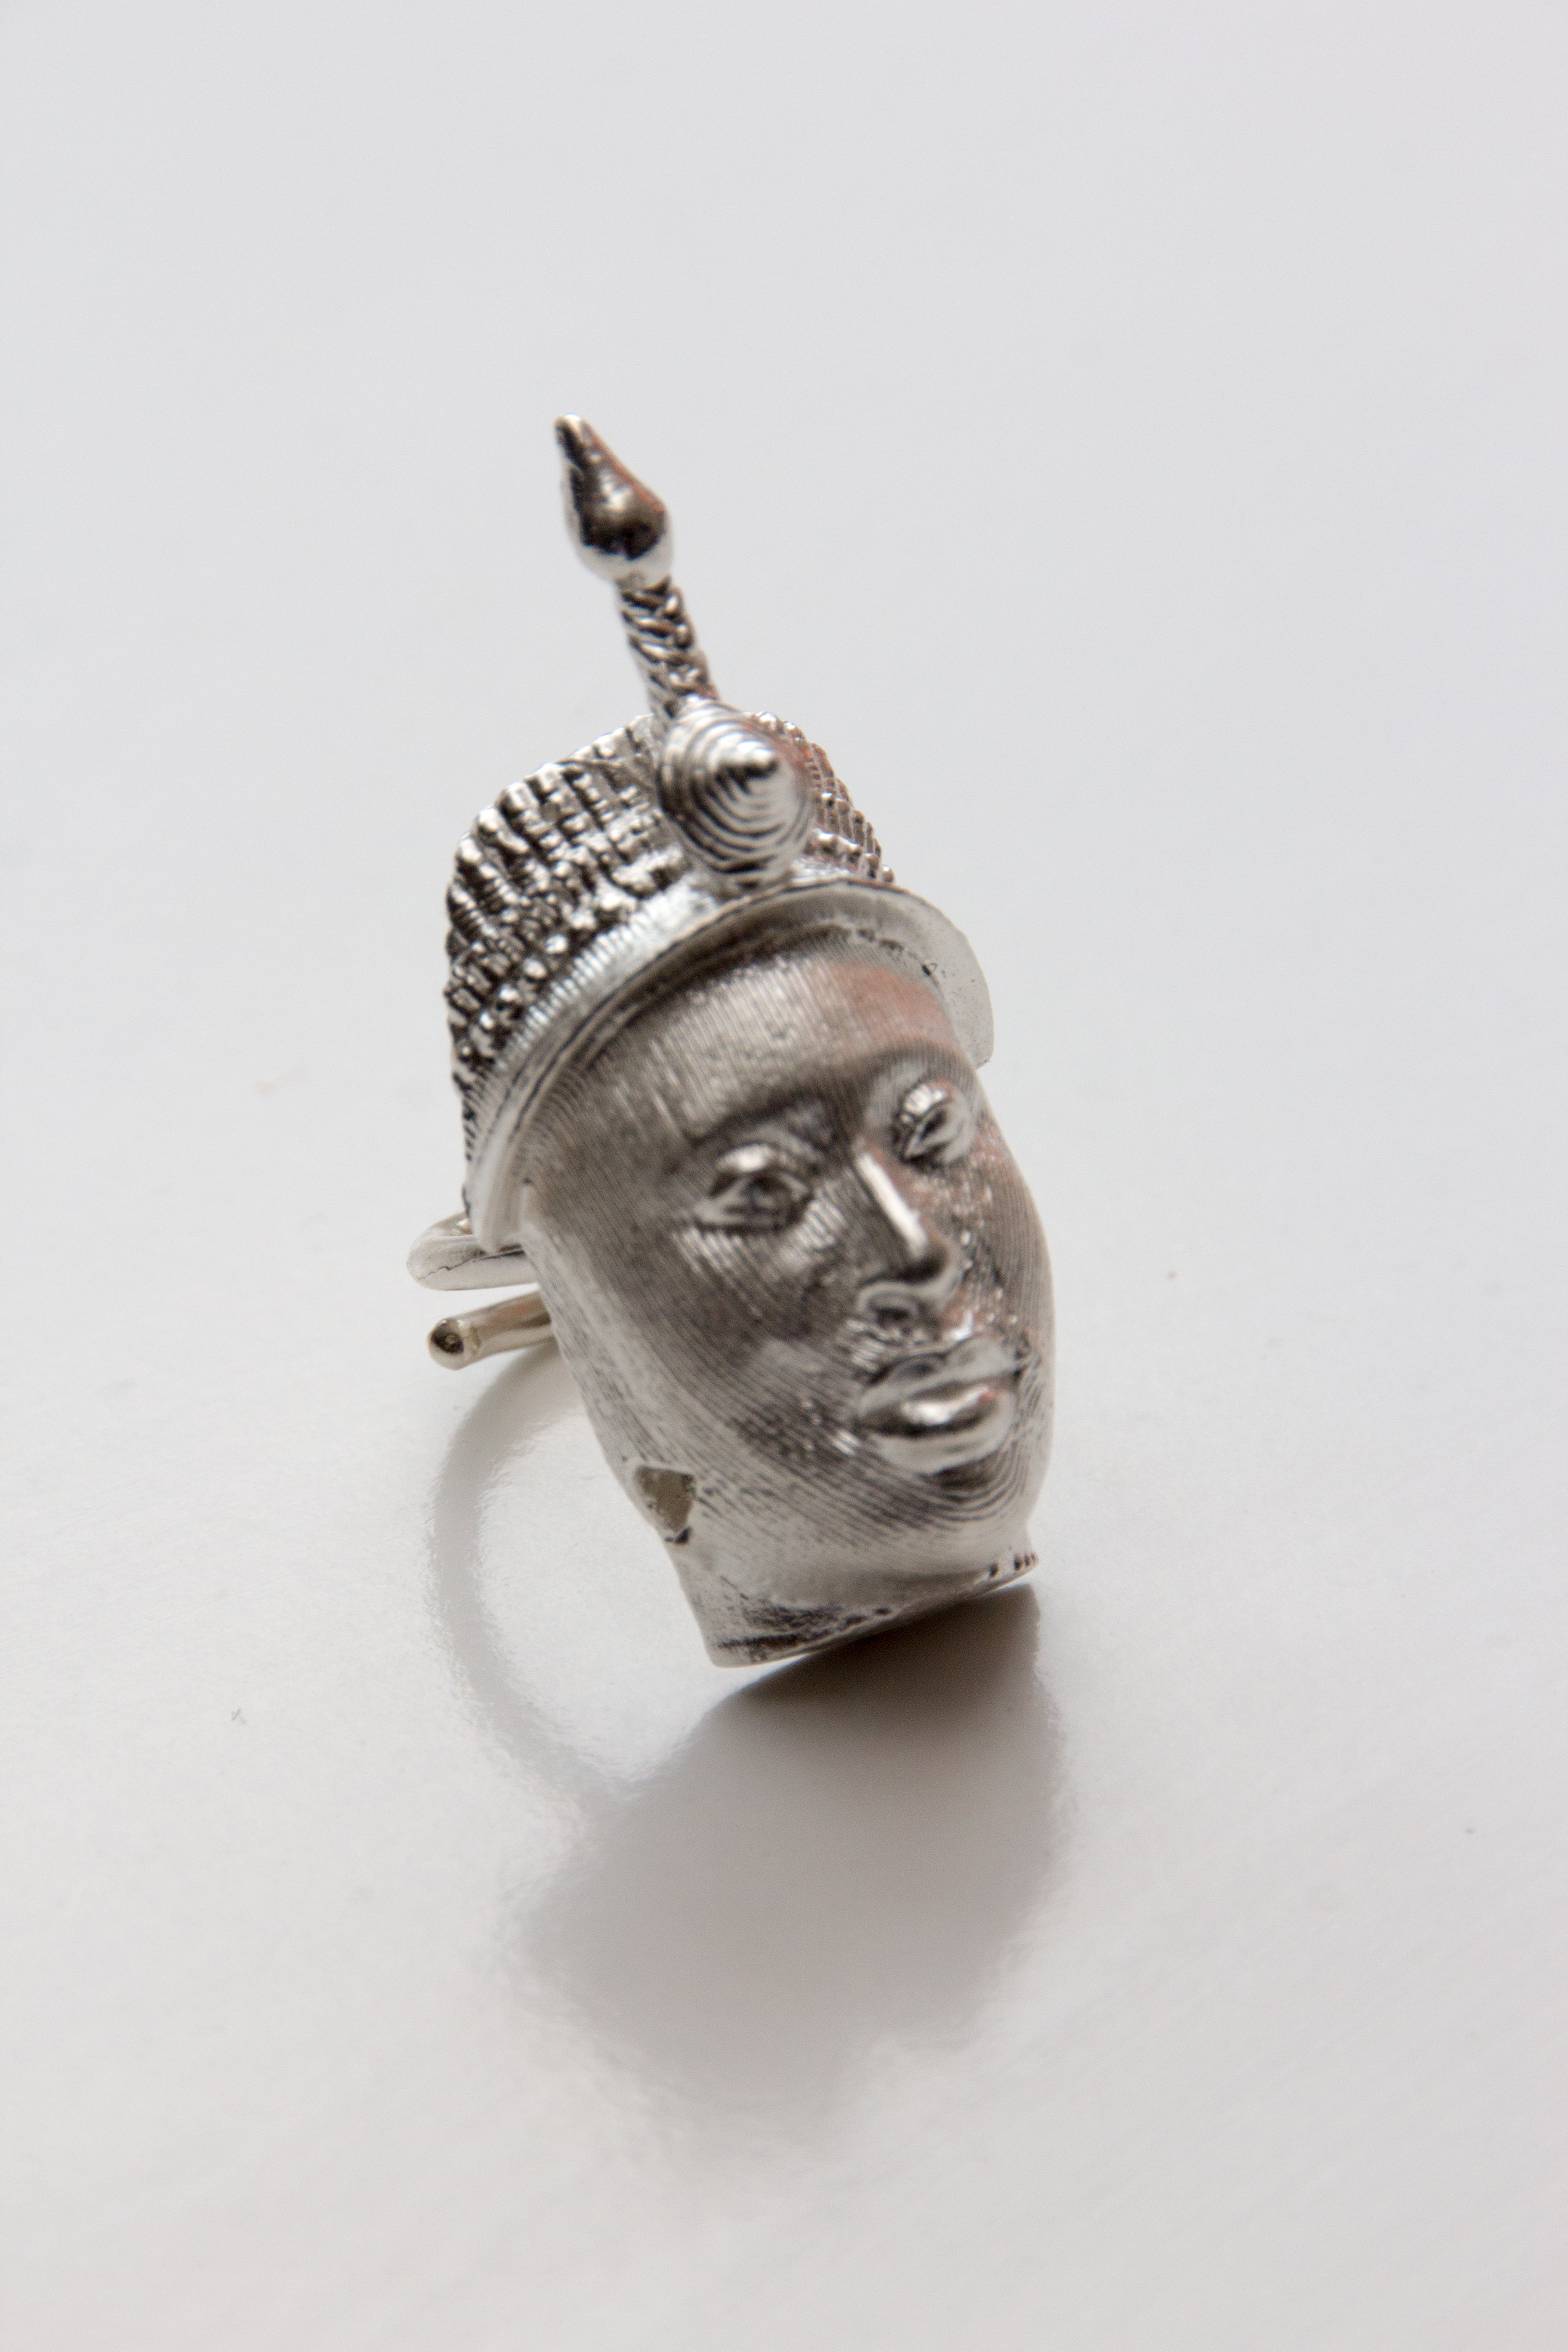 Kingdom of Ife Head Sterling Silver Ring (Medium)